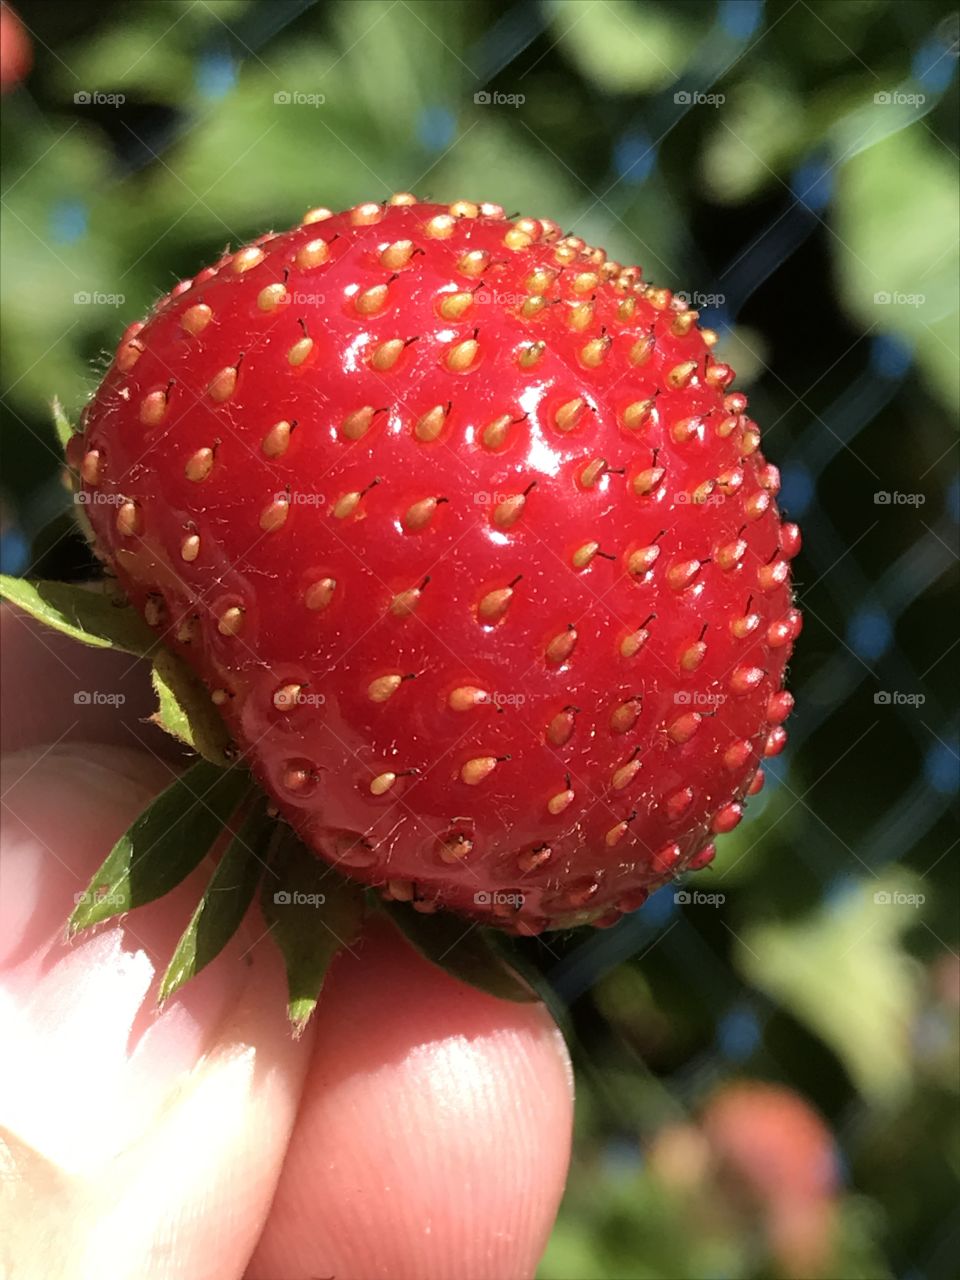 Sweet ripe strawberries 